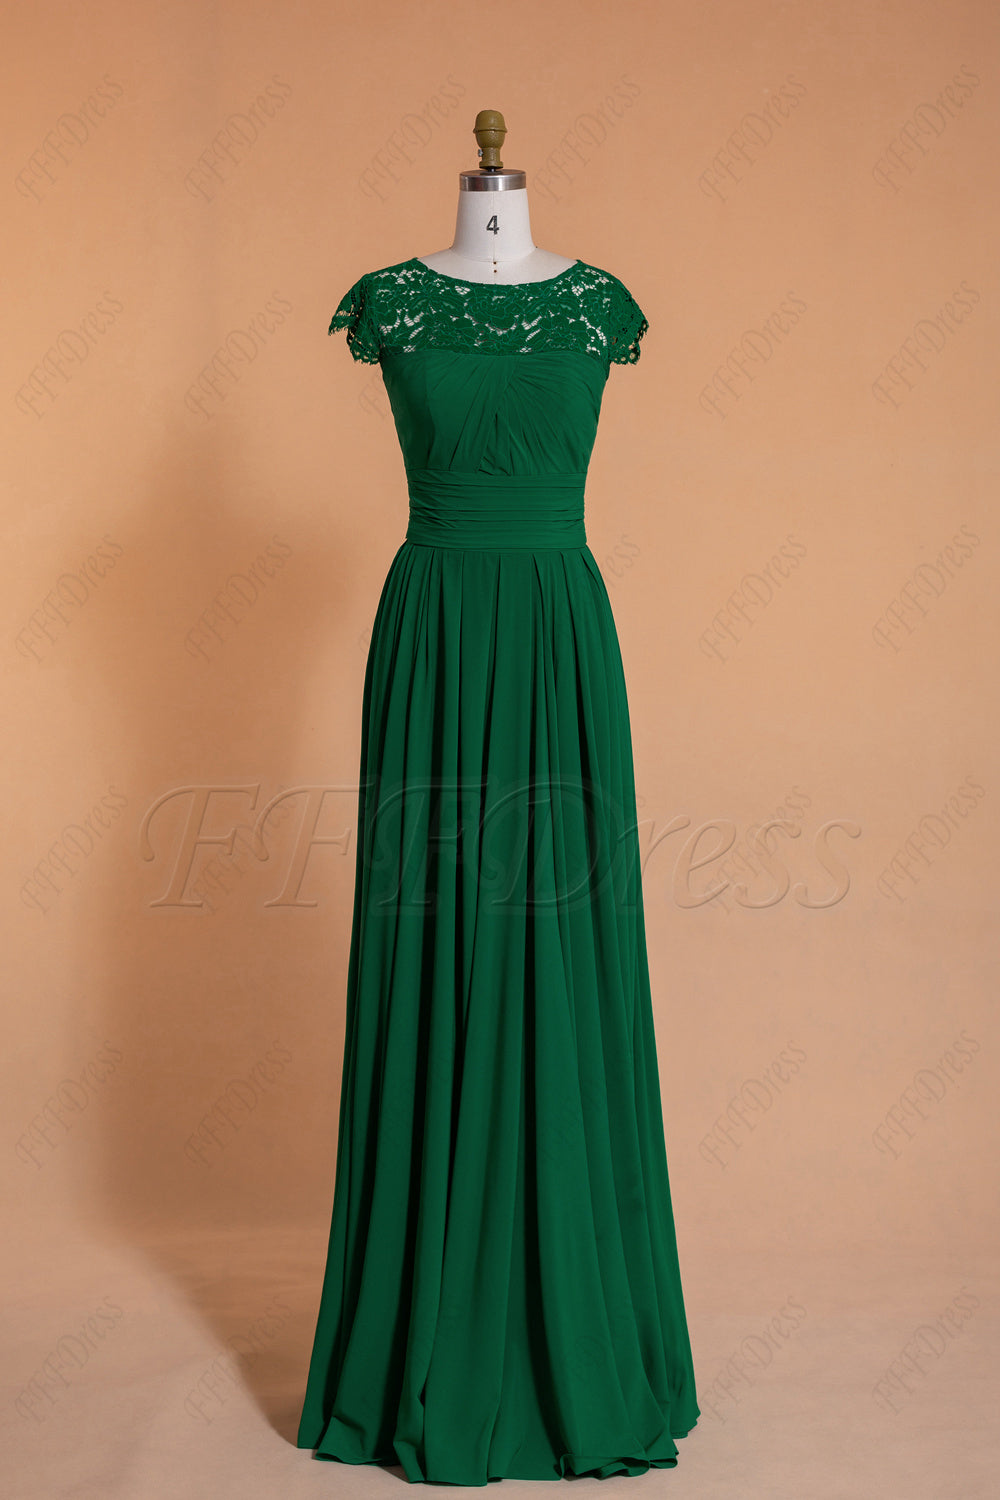 Modest Emerald Bridesmaid Dresses cap sleeves long